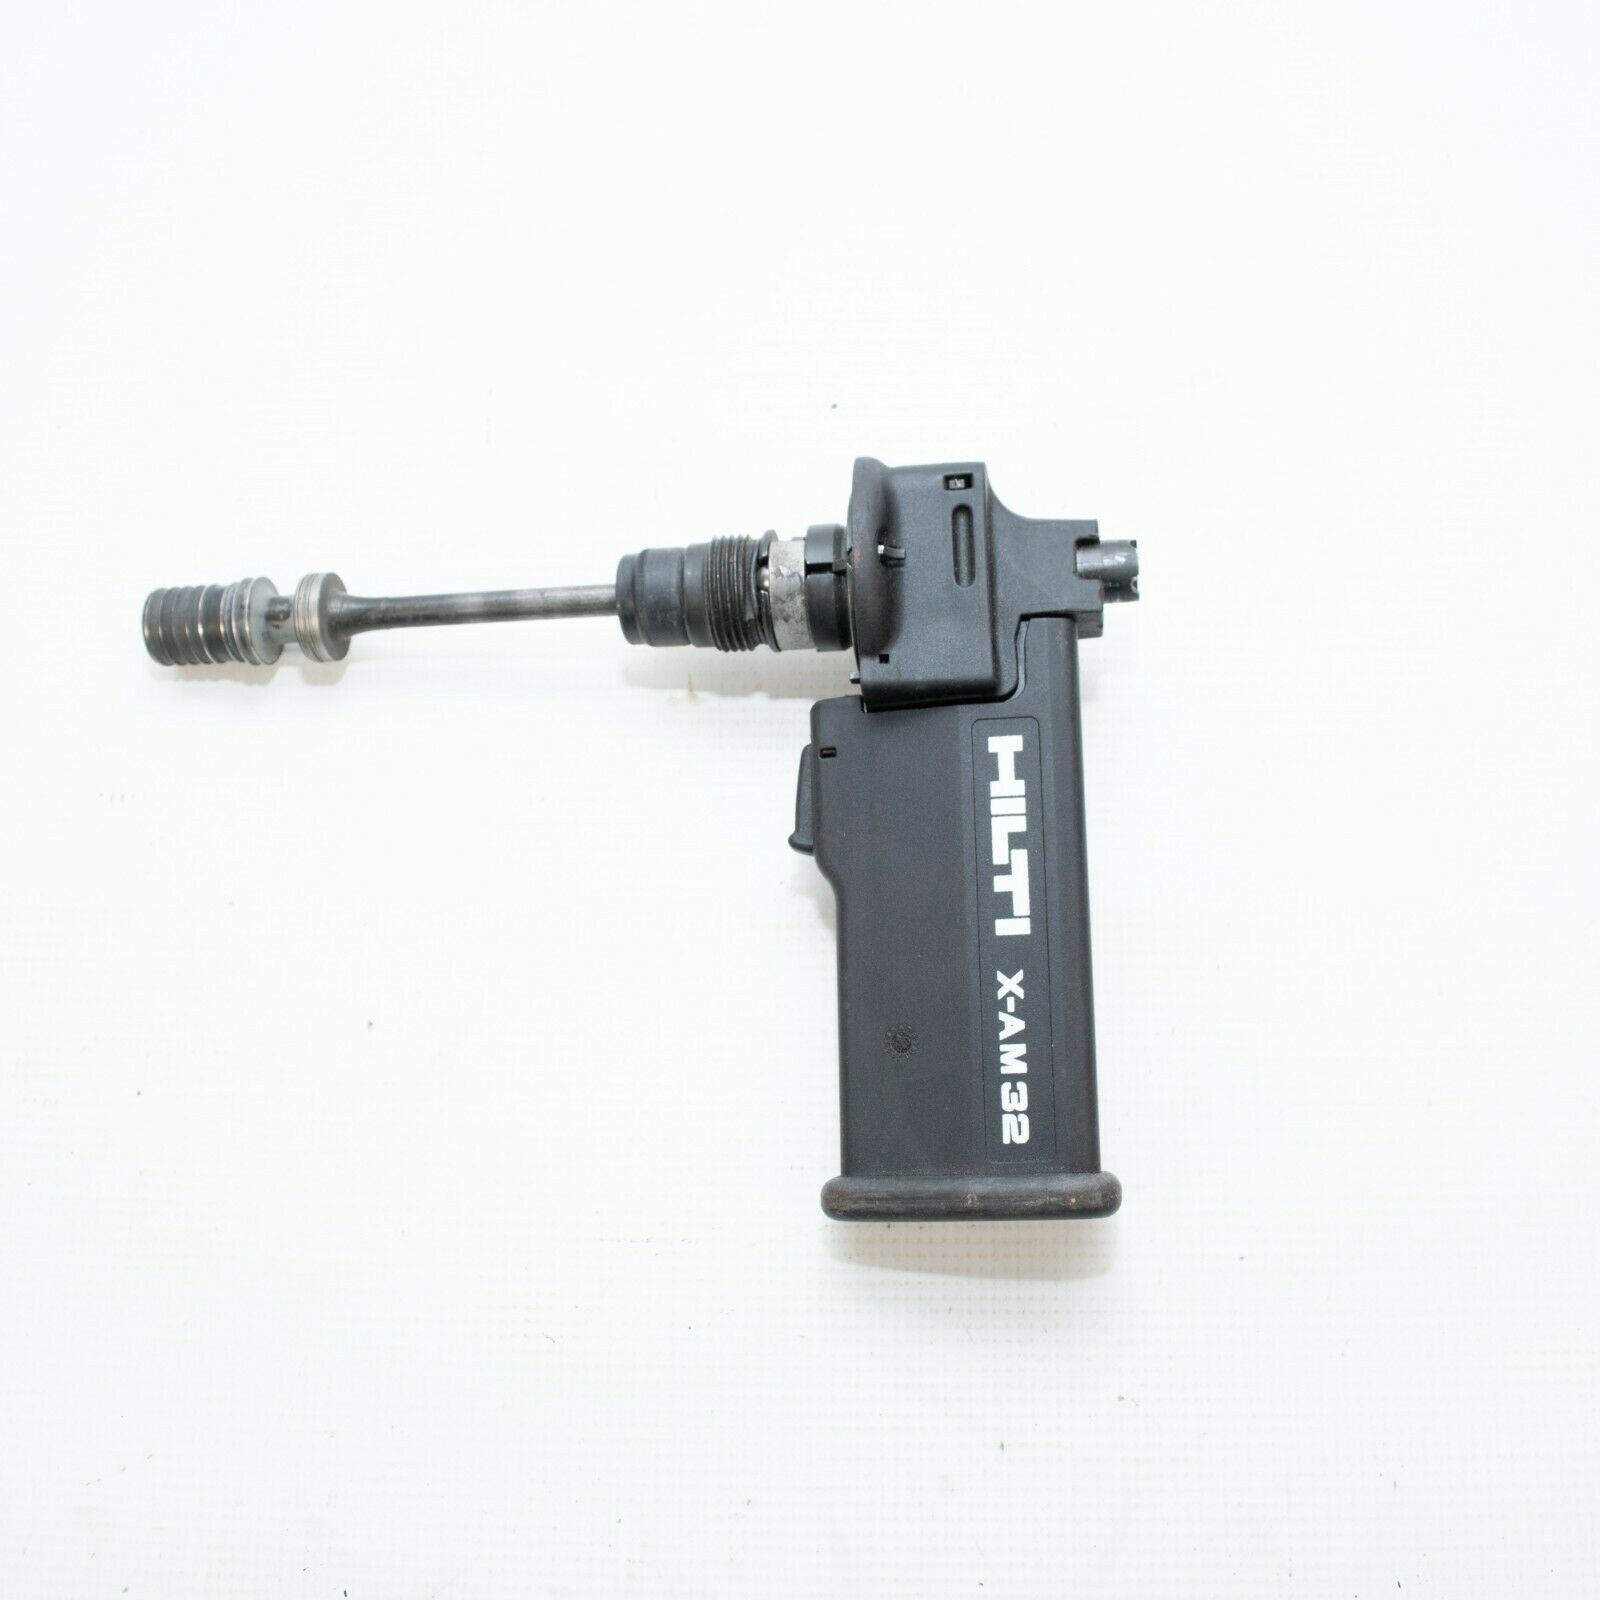 Hilti DX A40 Powder Actuated Concrete Gun w/ X-AM32 and case - ipawnishop.com